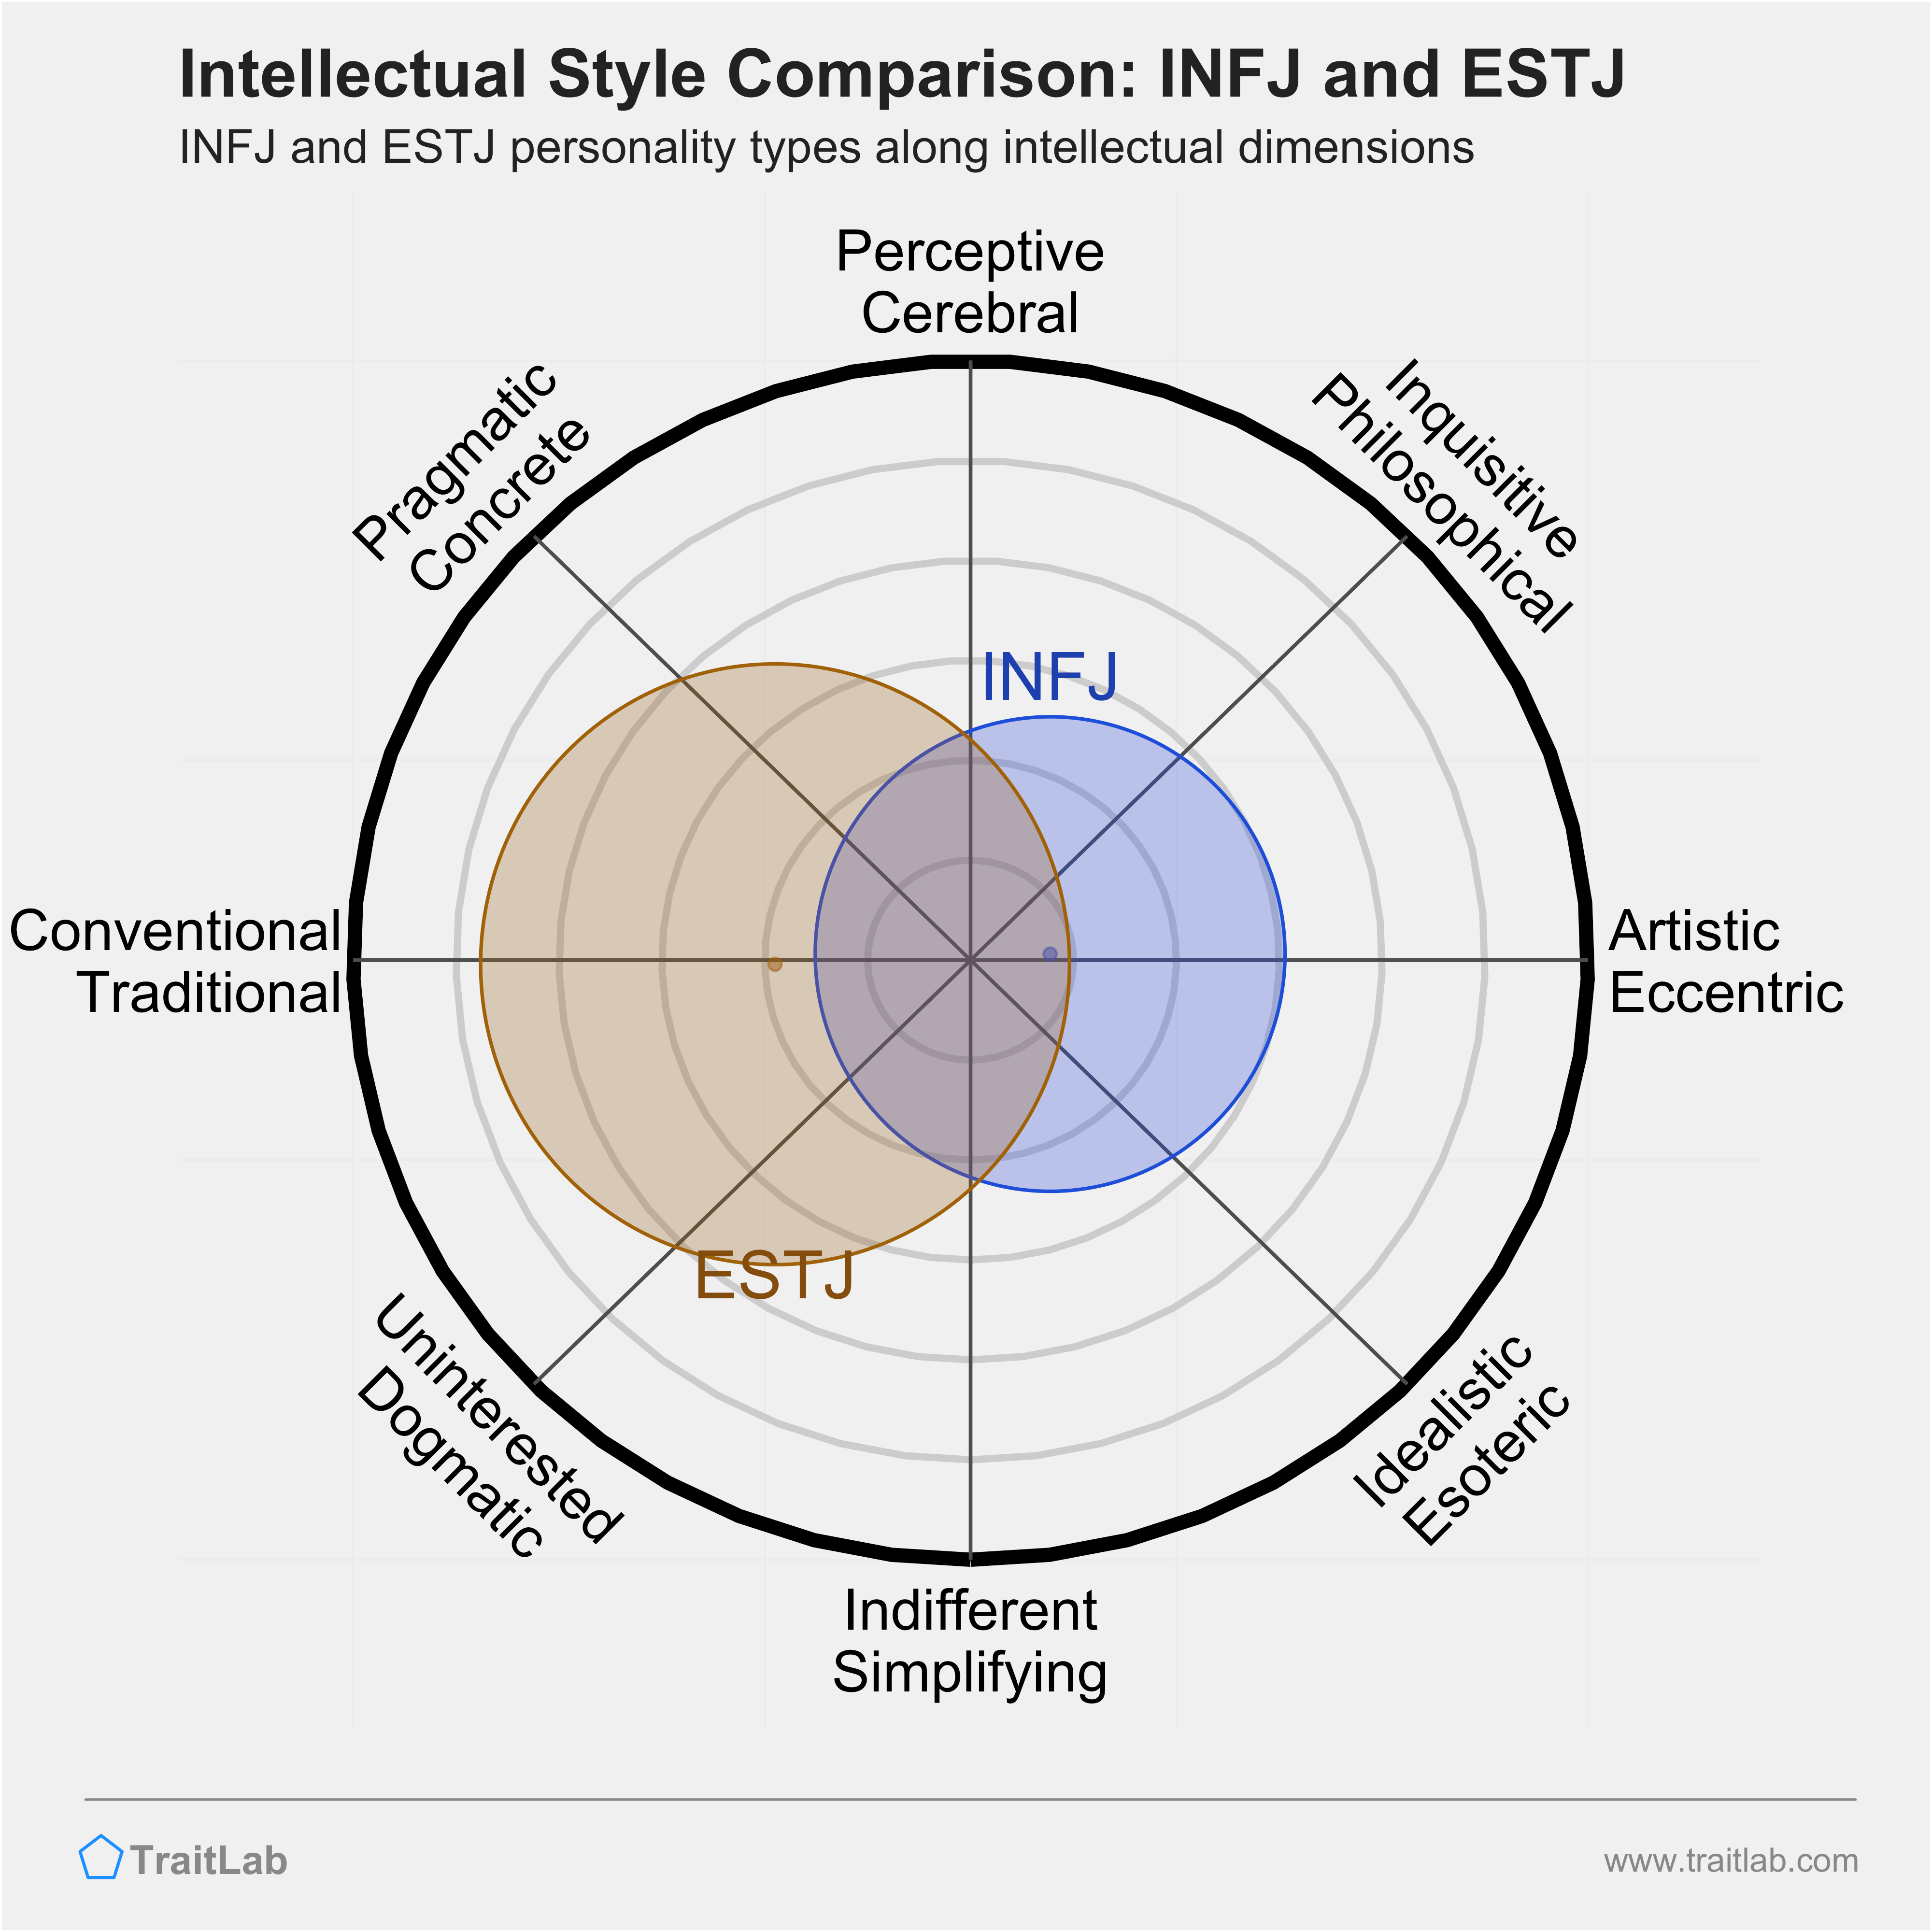 INFJ and ESTJ comparison across intellectual dimensions